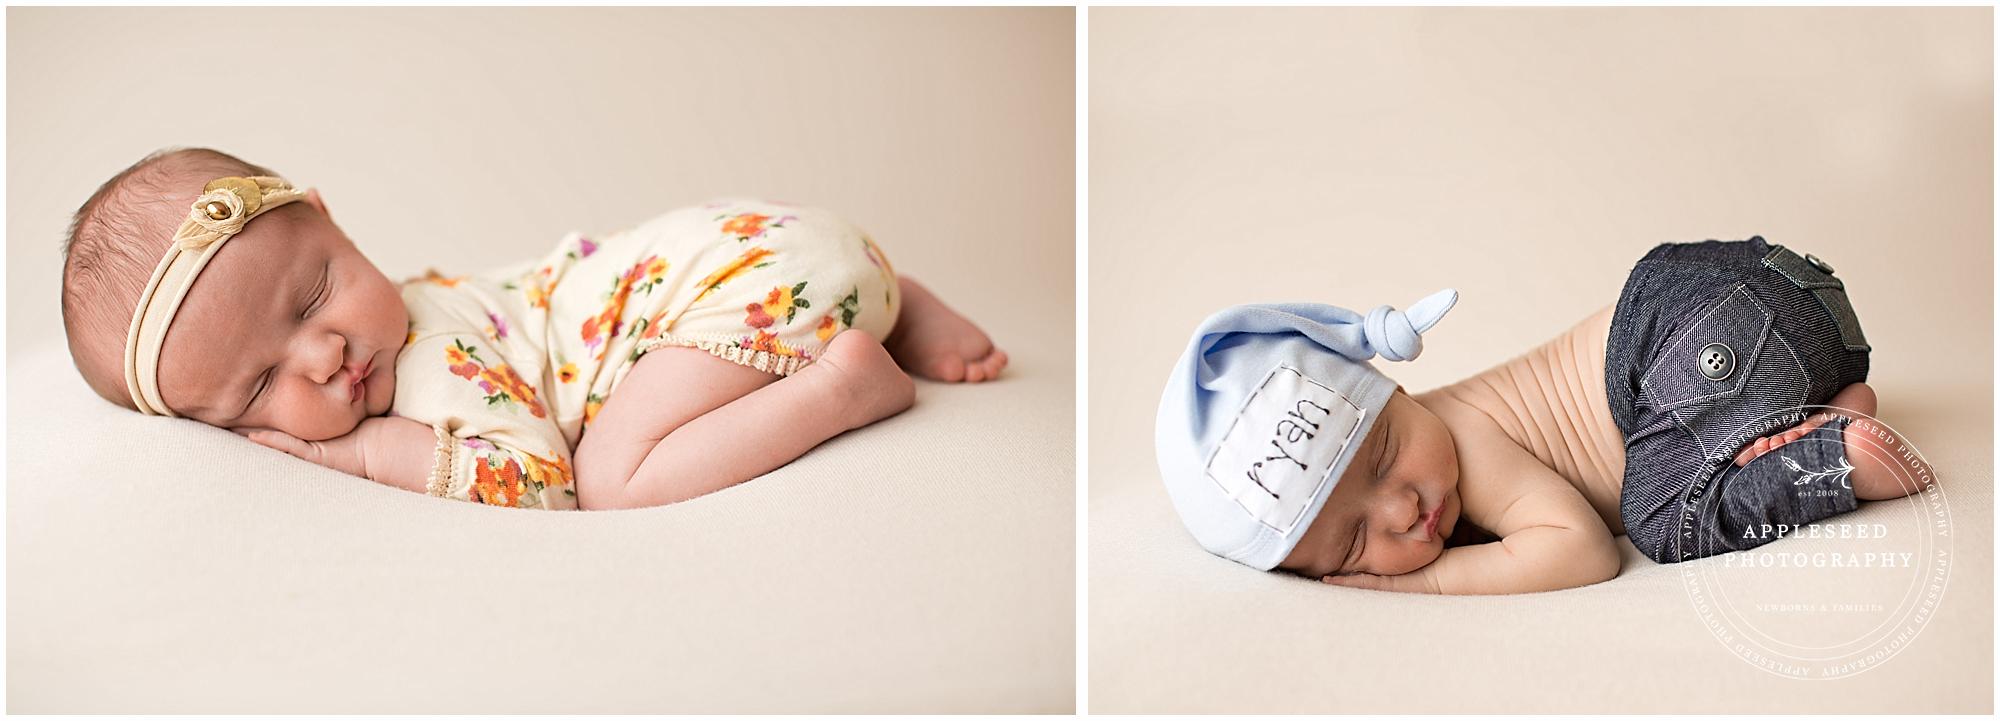 Newborn Photographer Atlanta |  Appleseed Photography